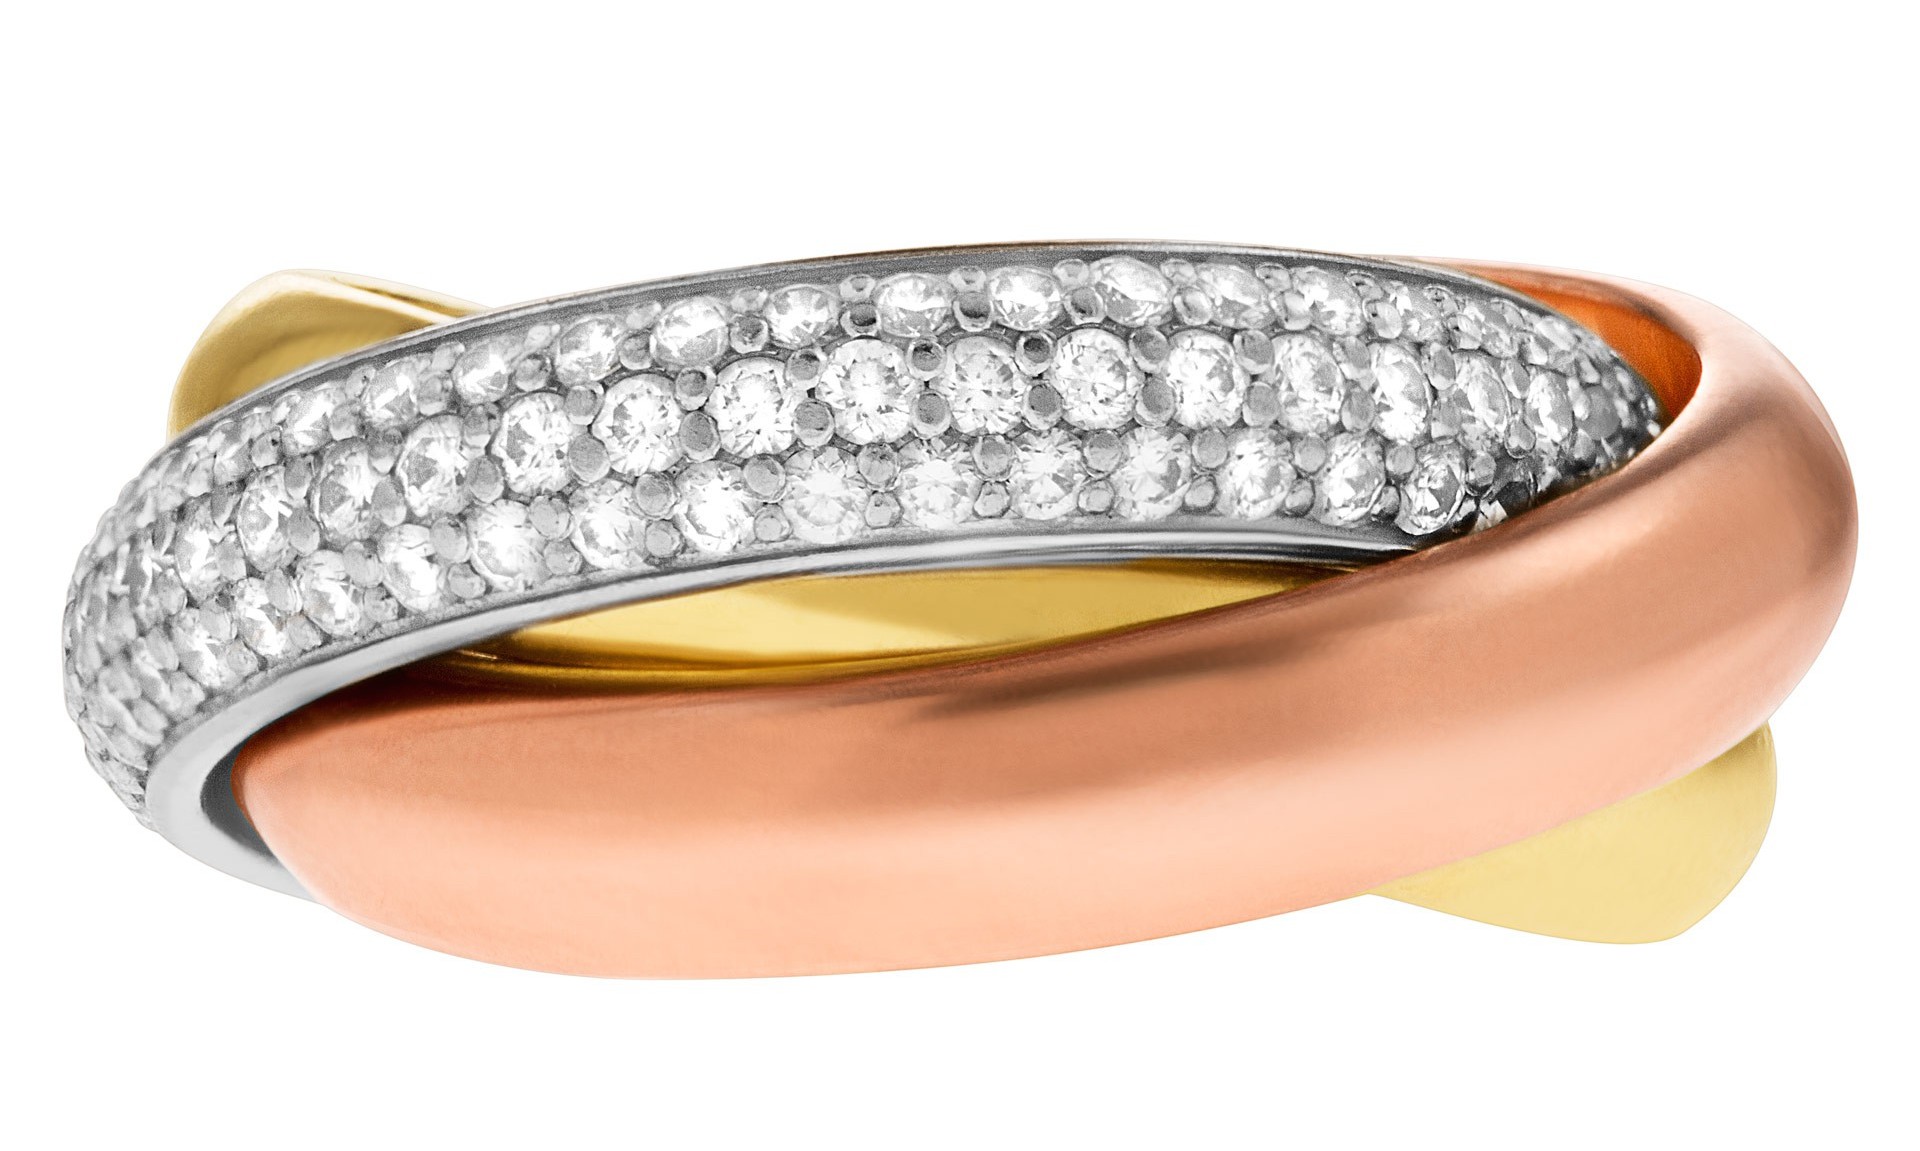 Cartier Jewelry Trinity Ring